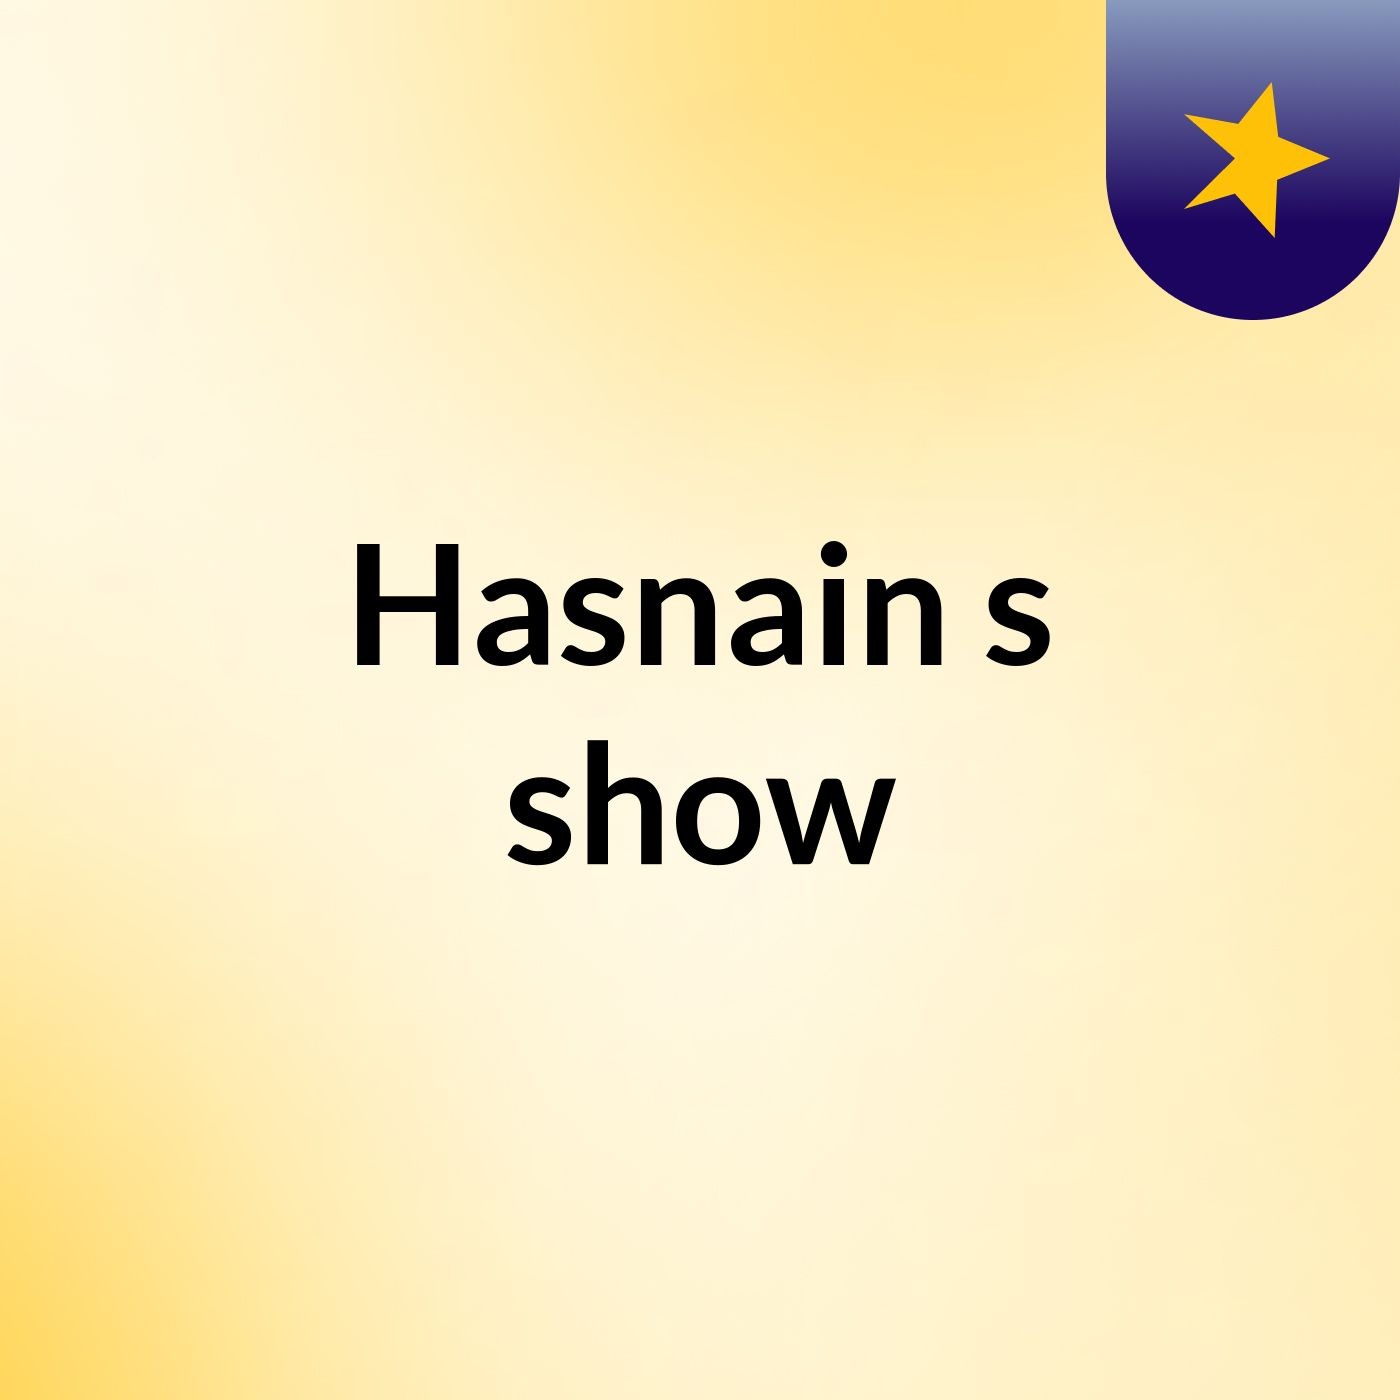 Hasnain's show